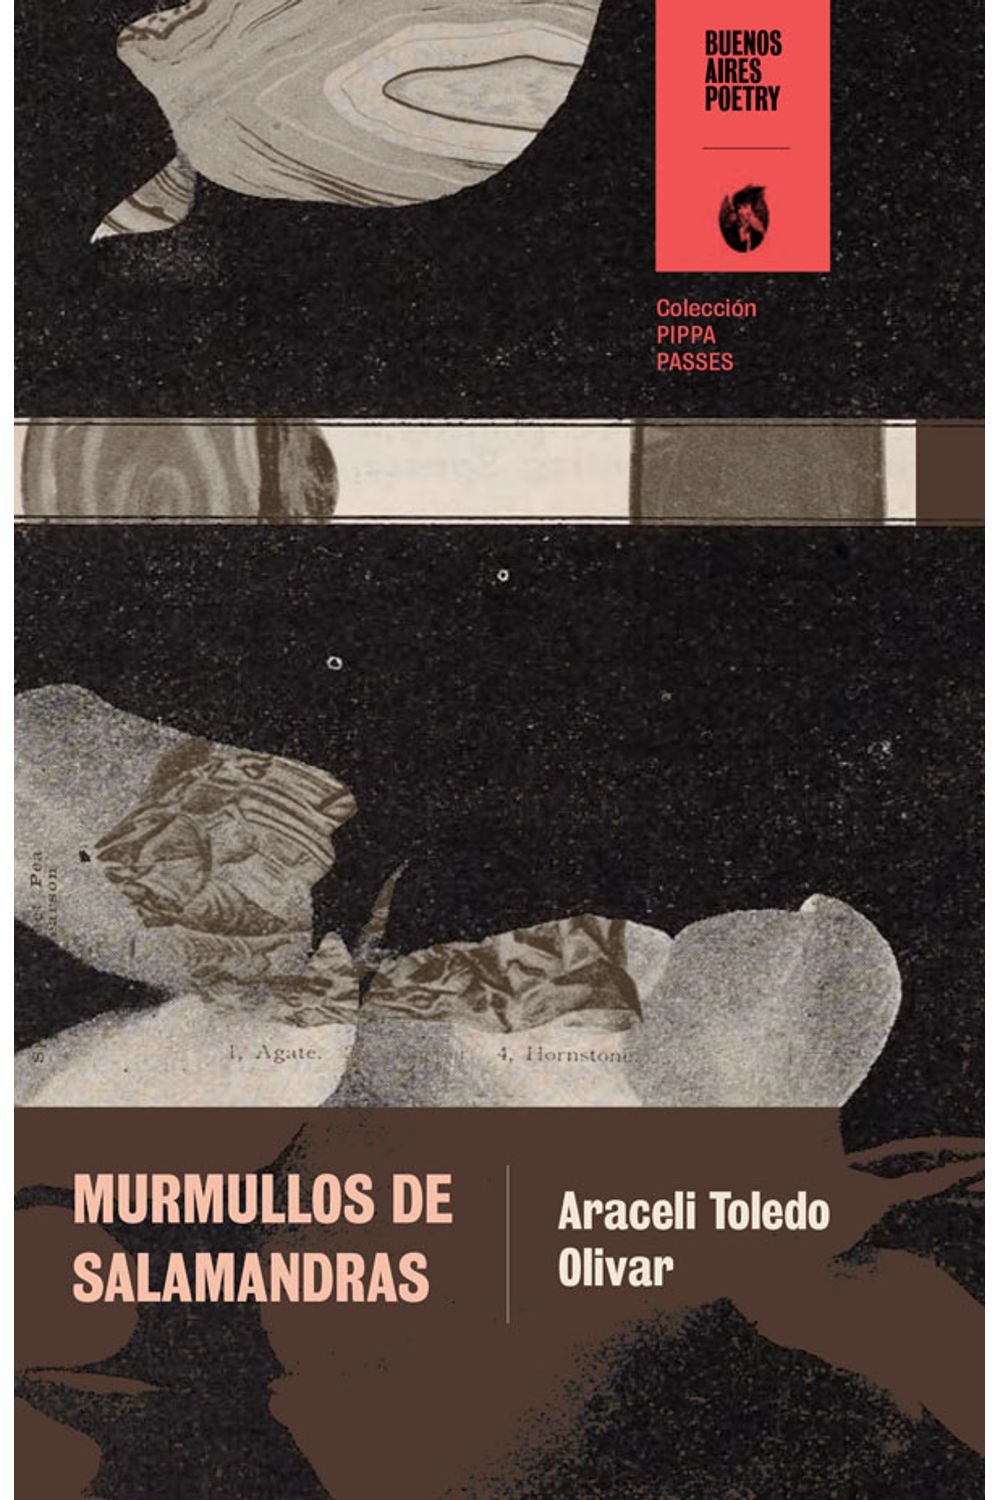 bm-murmullos-de-salamandras-buenosaires-poetry-9789874197634